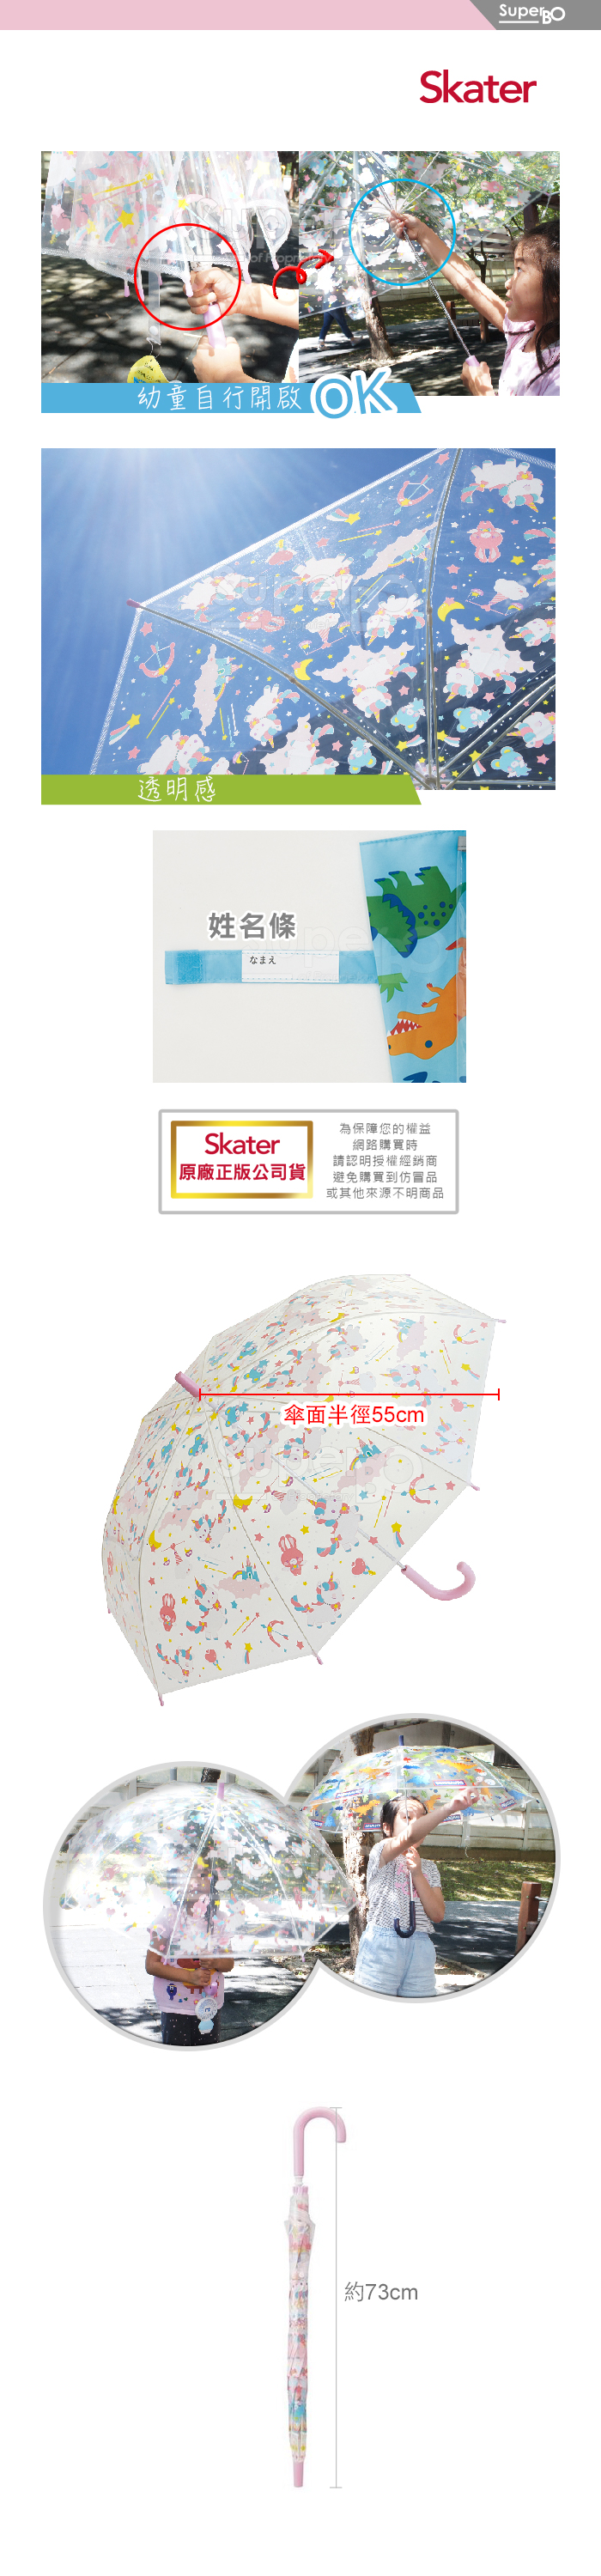 Skater透明雨傘 線上購物 Superbo永豐耀